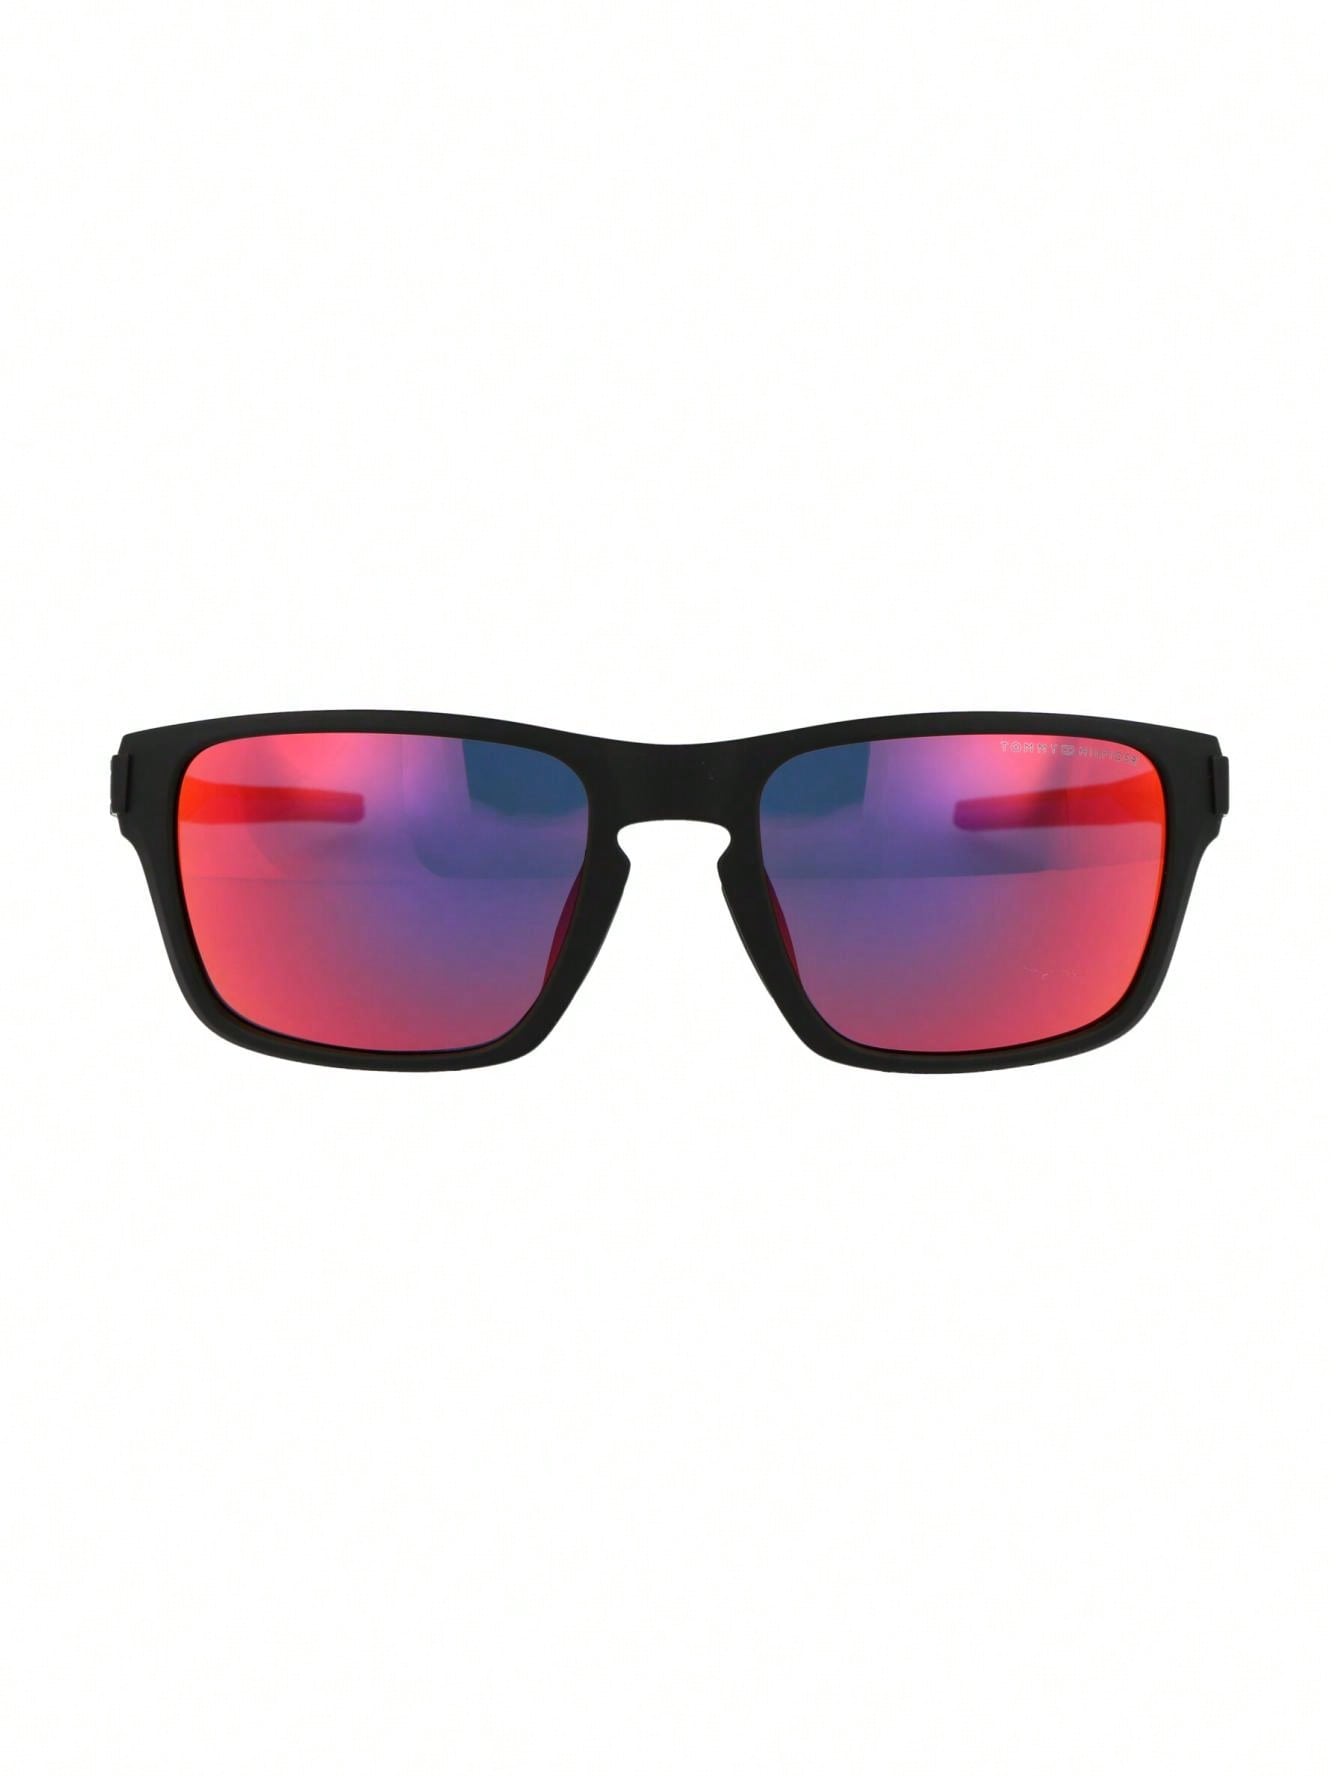 Мужские солнцезащитные очки Tommy Hilfiger DECOR TH1952S0VKPL, многоцветный солнцезащитные очки tommy hilfiger черный